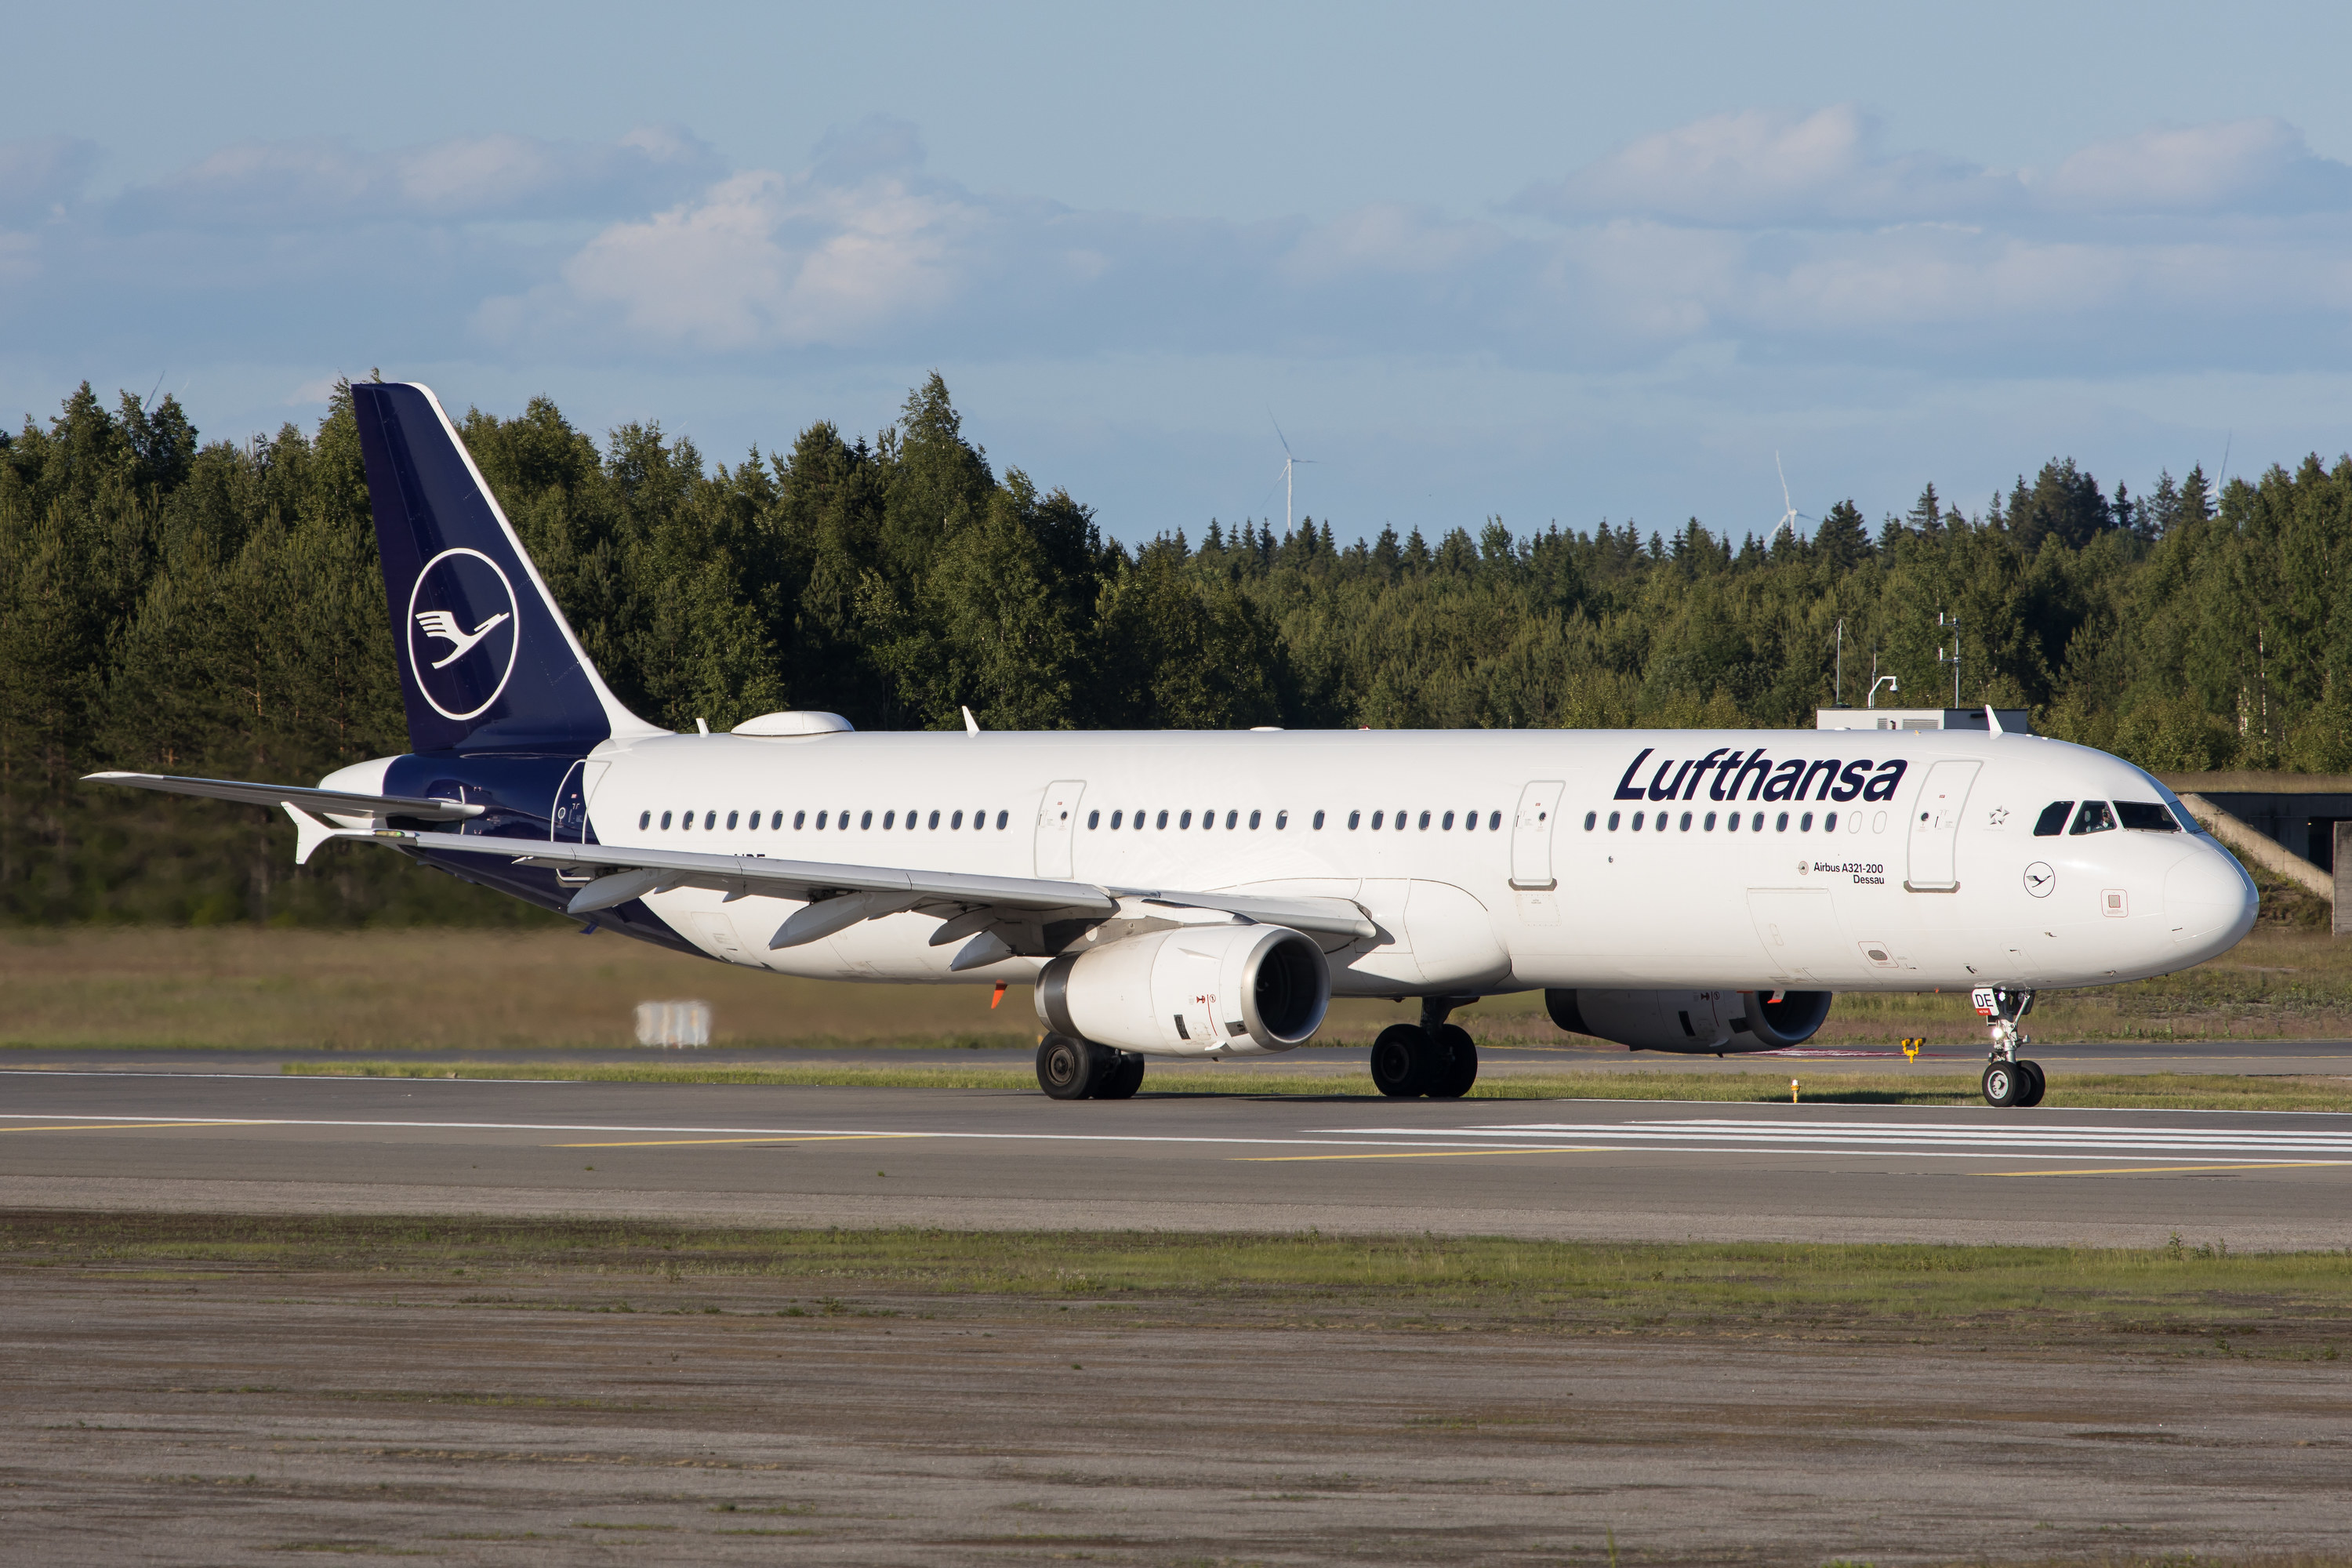 A Lufthansa airplane on the tarmac